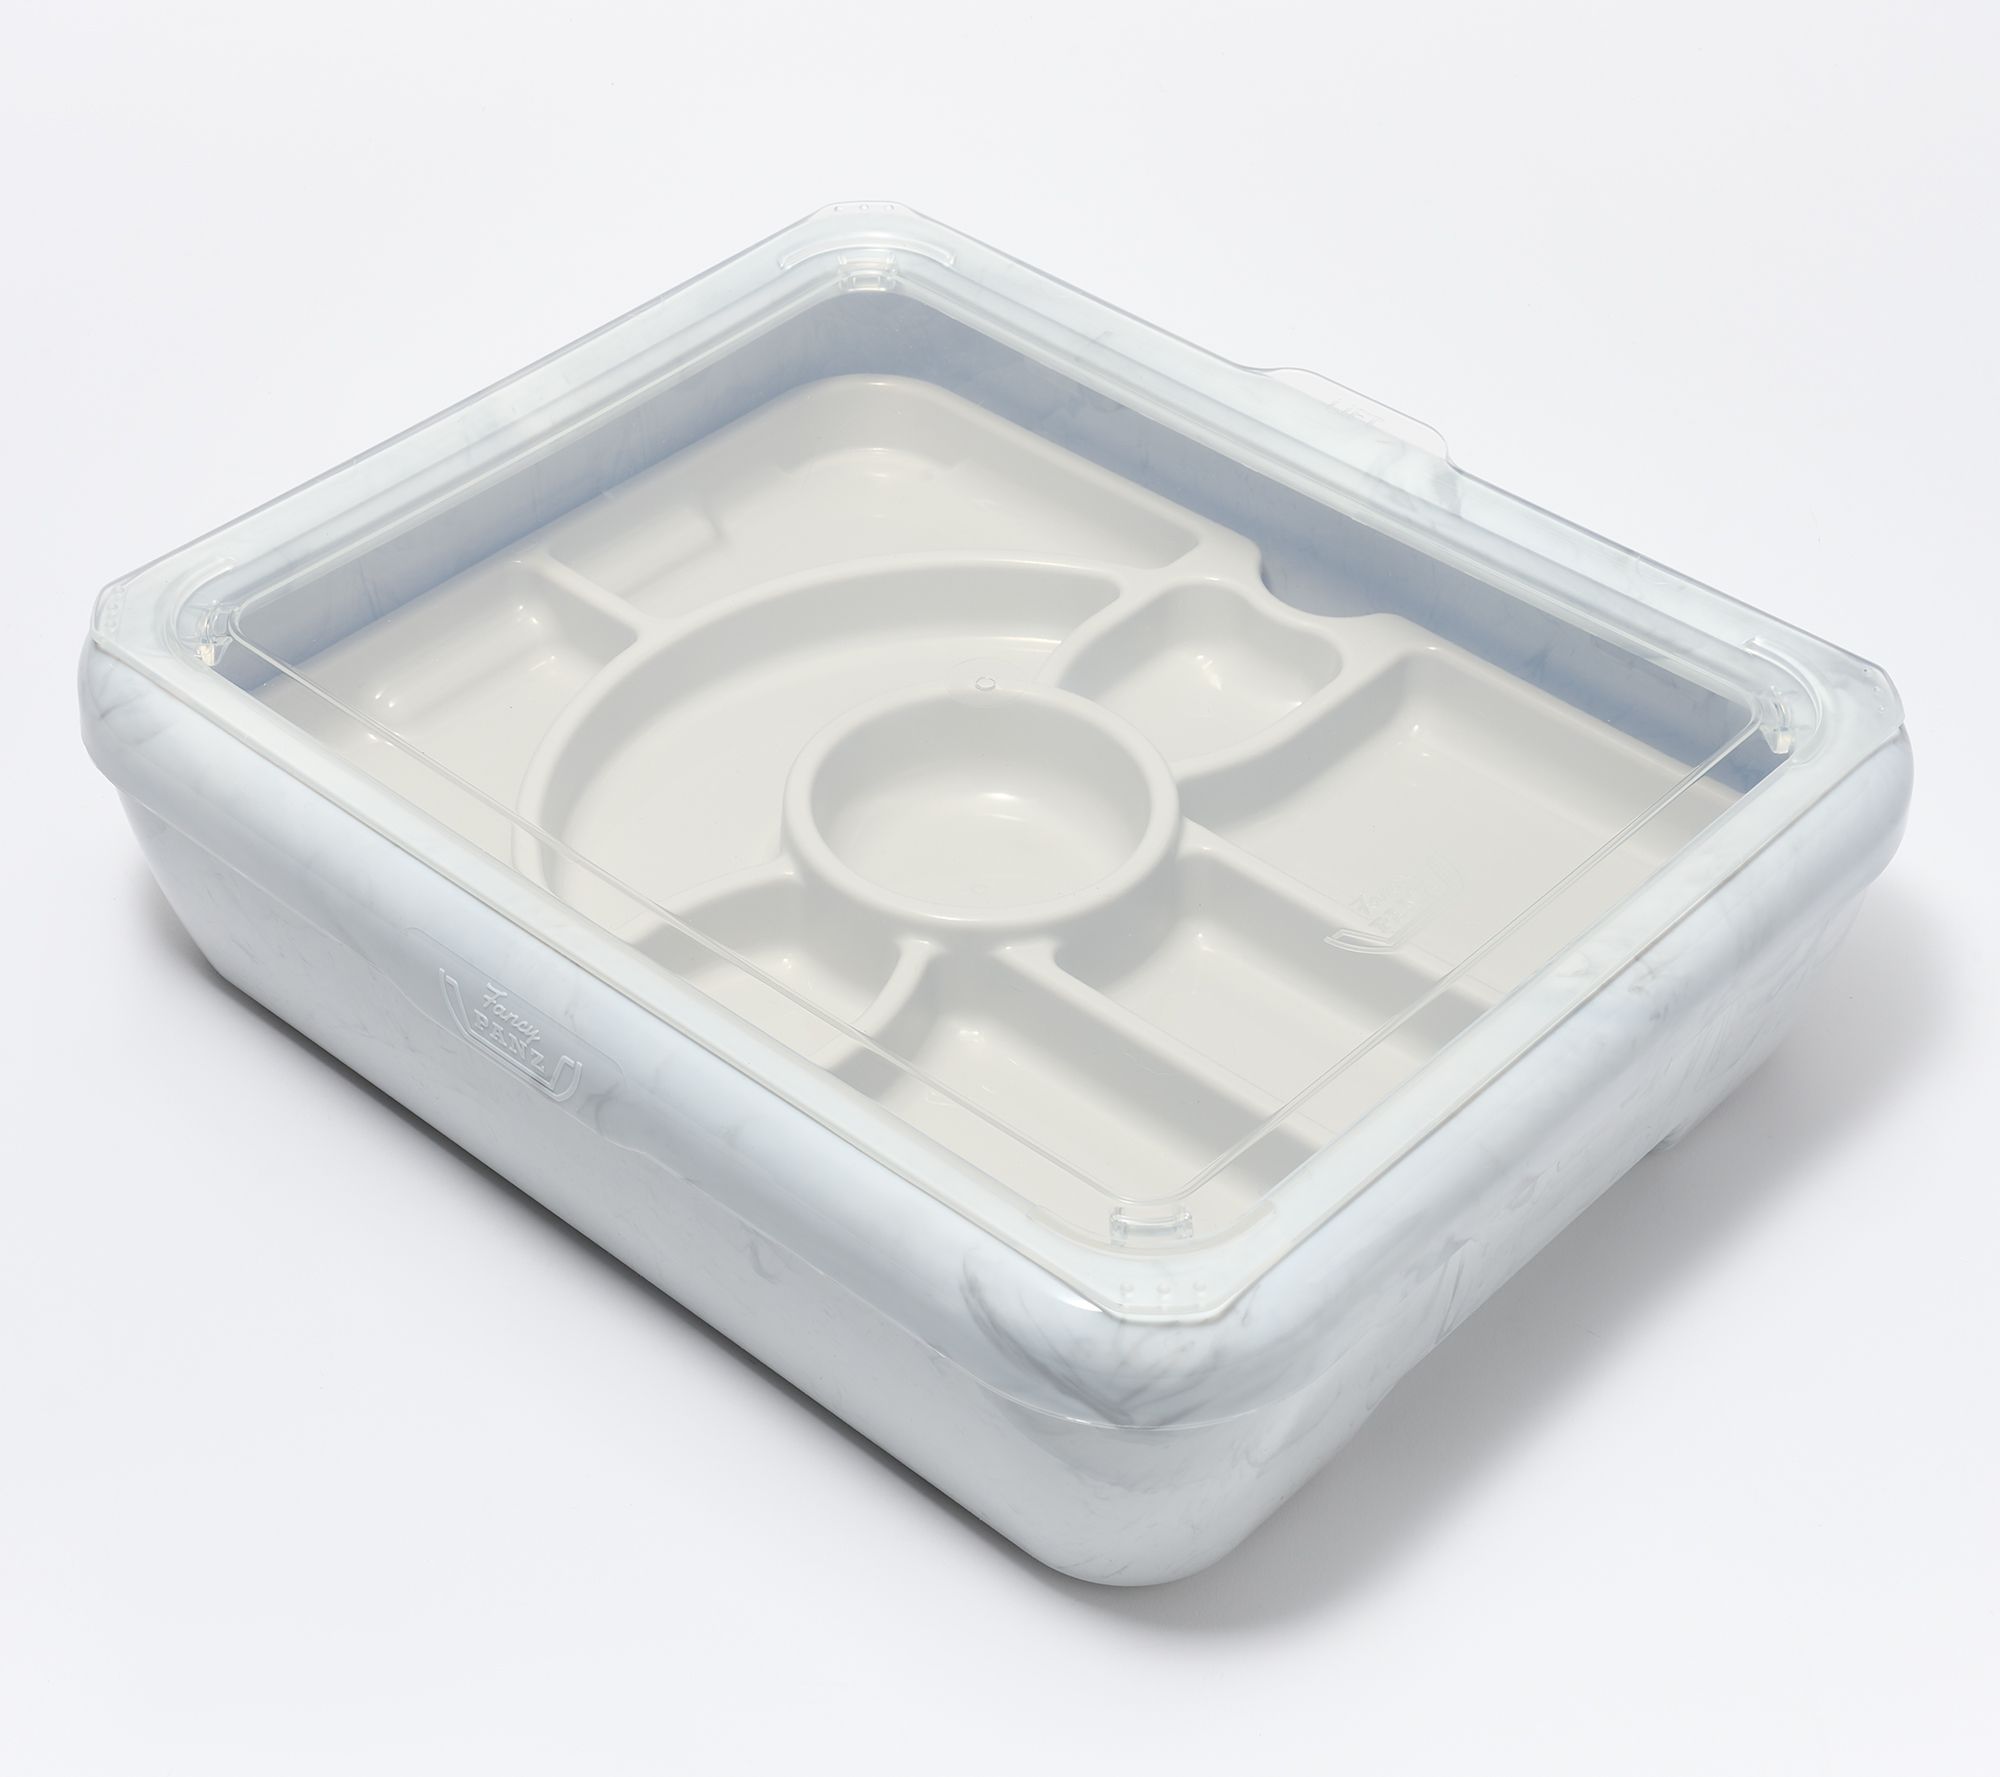 Ez Foil All Purpose Disposable Bakeware : Target